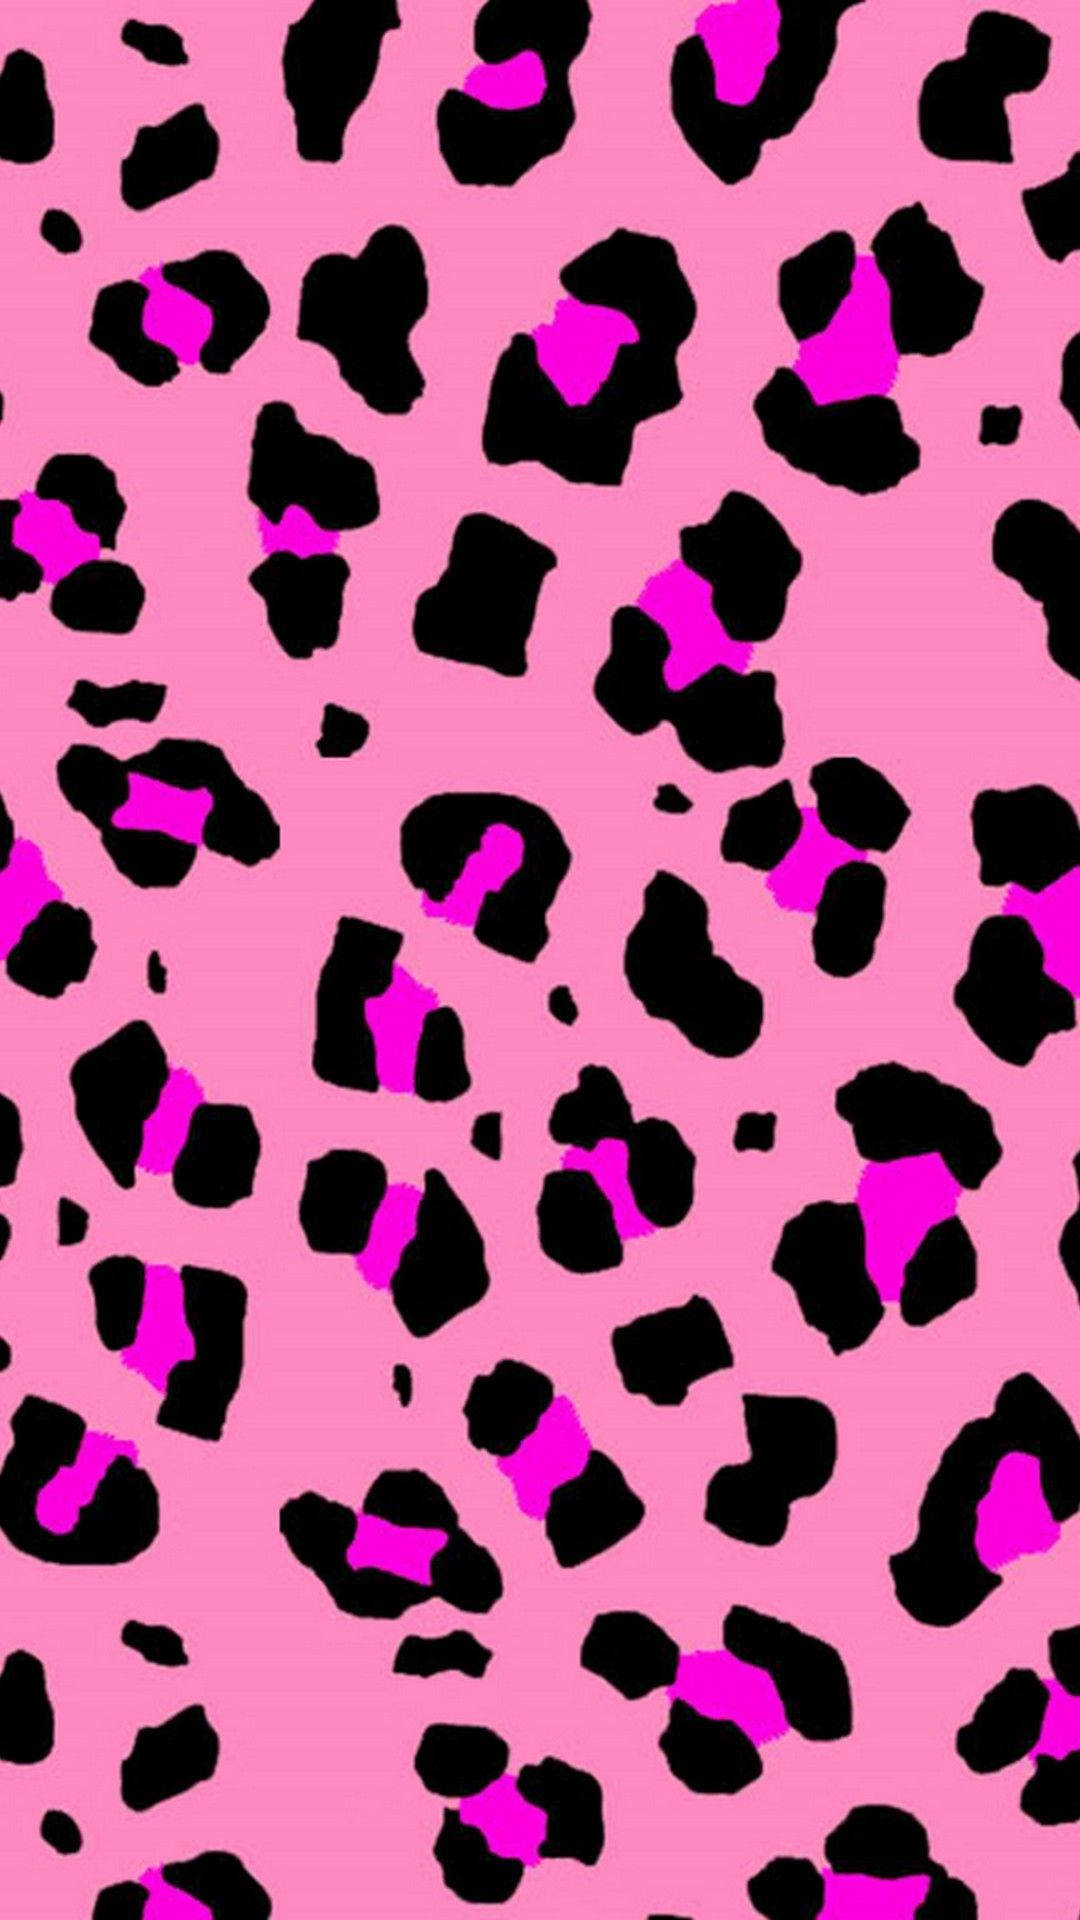 Neon Aesthetic Girly Leopard Print